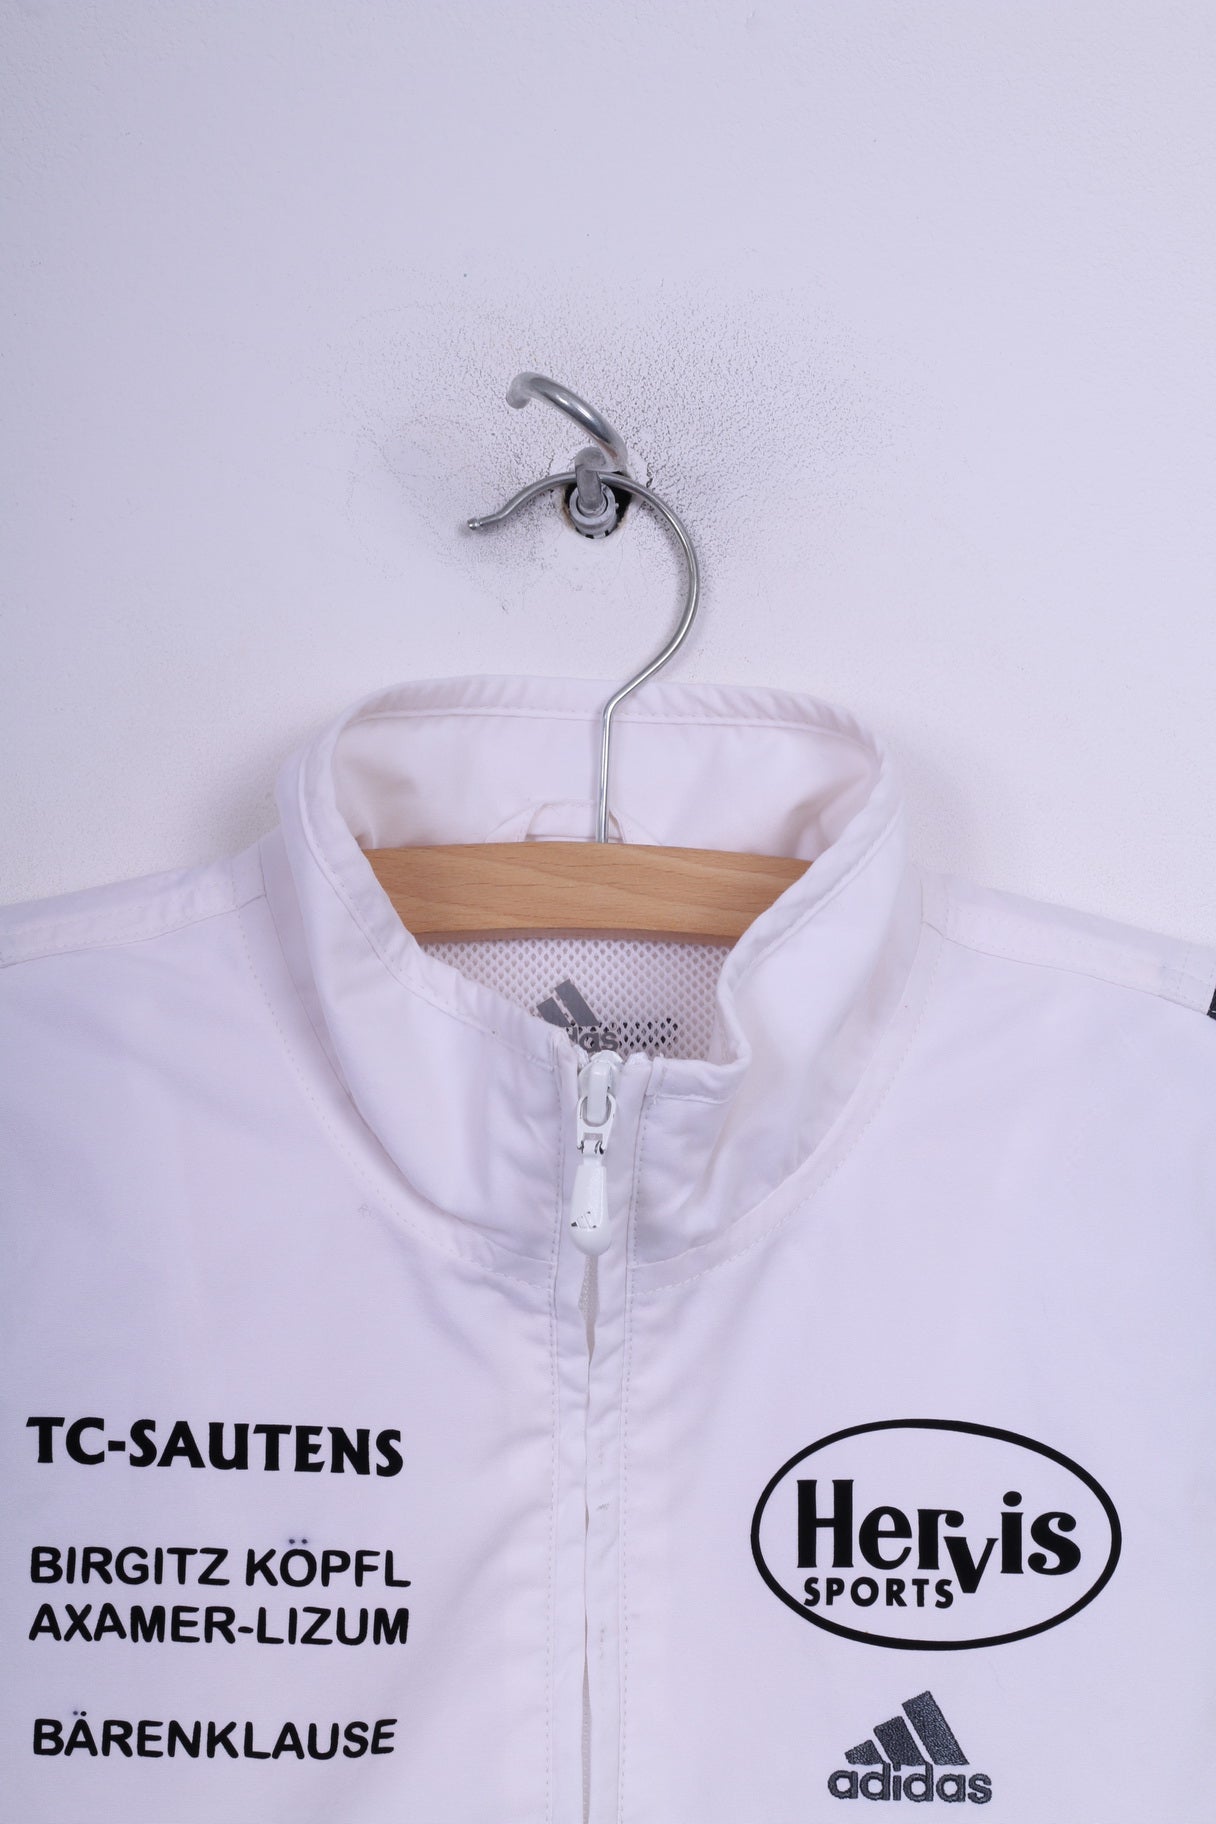 Adidas Hervis Sports Tc-Sautens Womens 10 S Lightweight Jacket White Full Zipper Sportswear